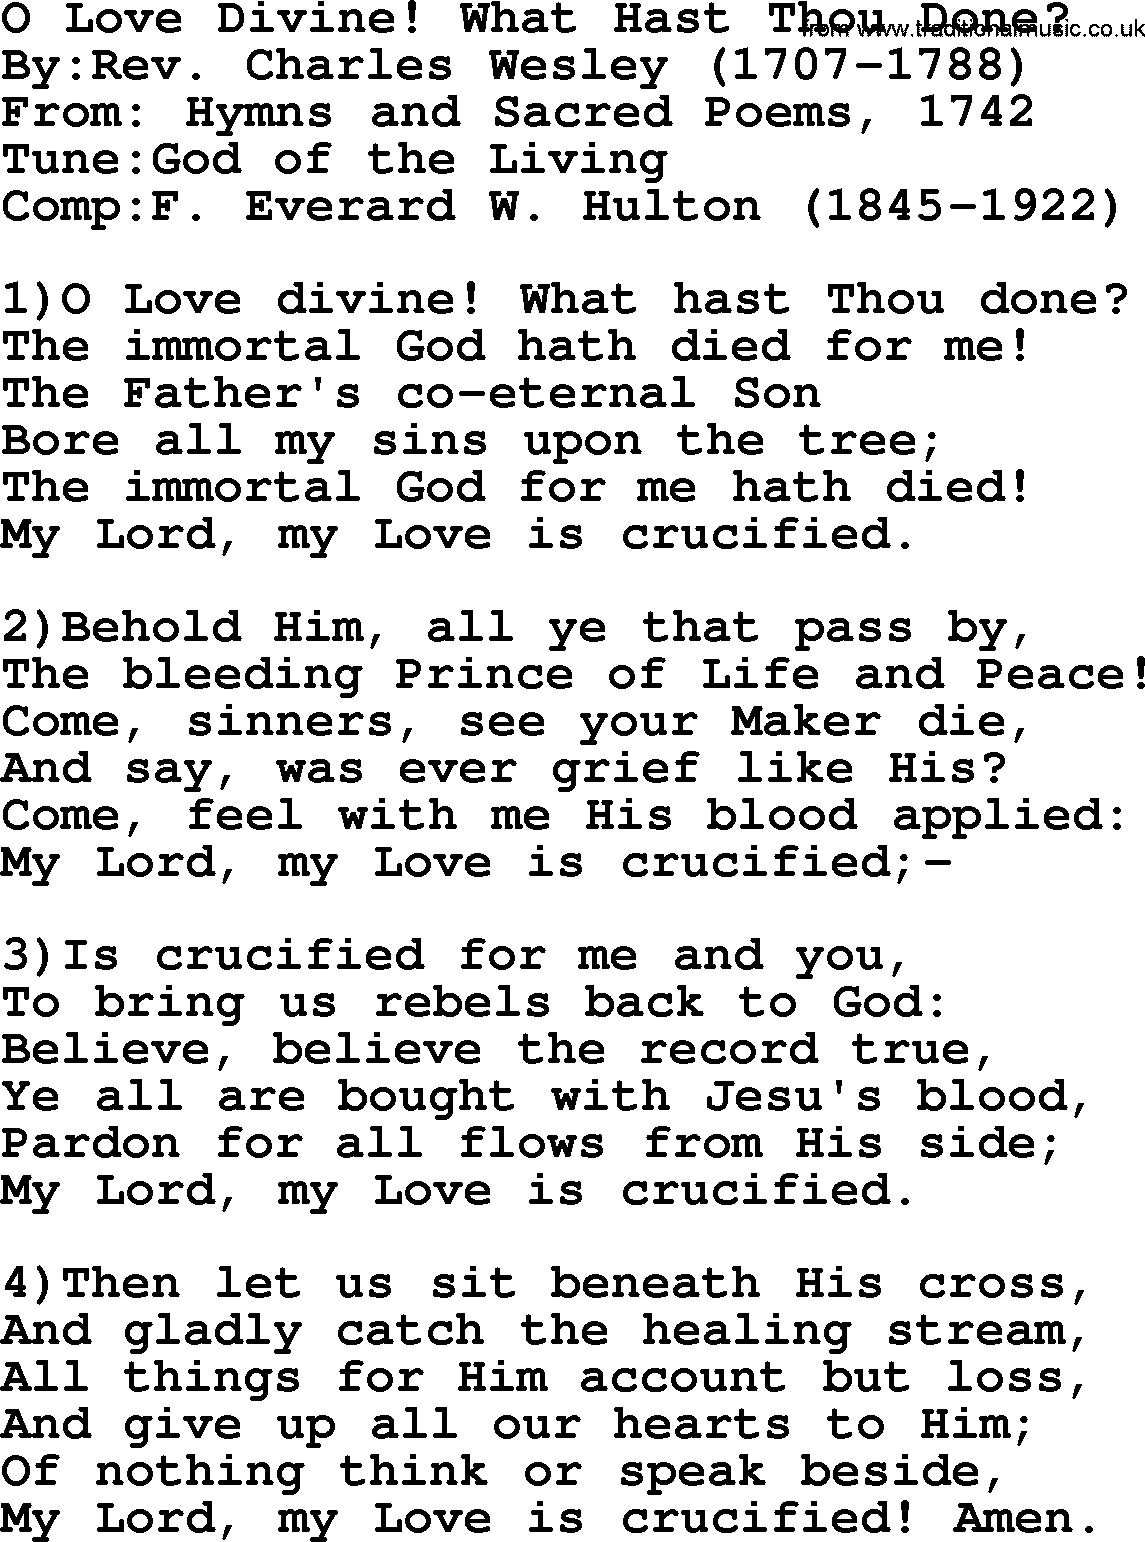 Methodist Hymn: O Love Divine! What Hast Thou Done, lyrics